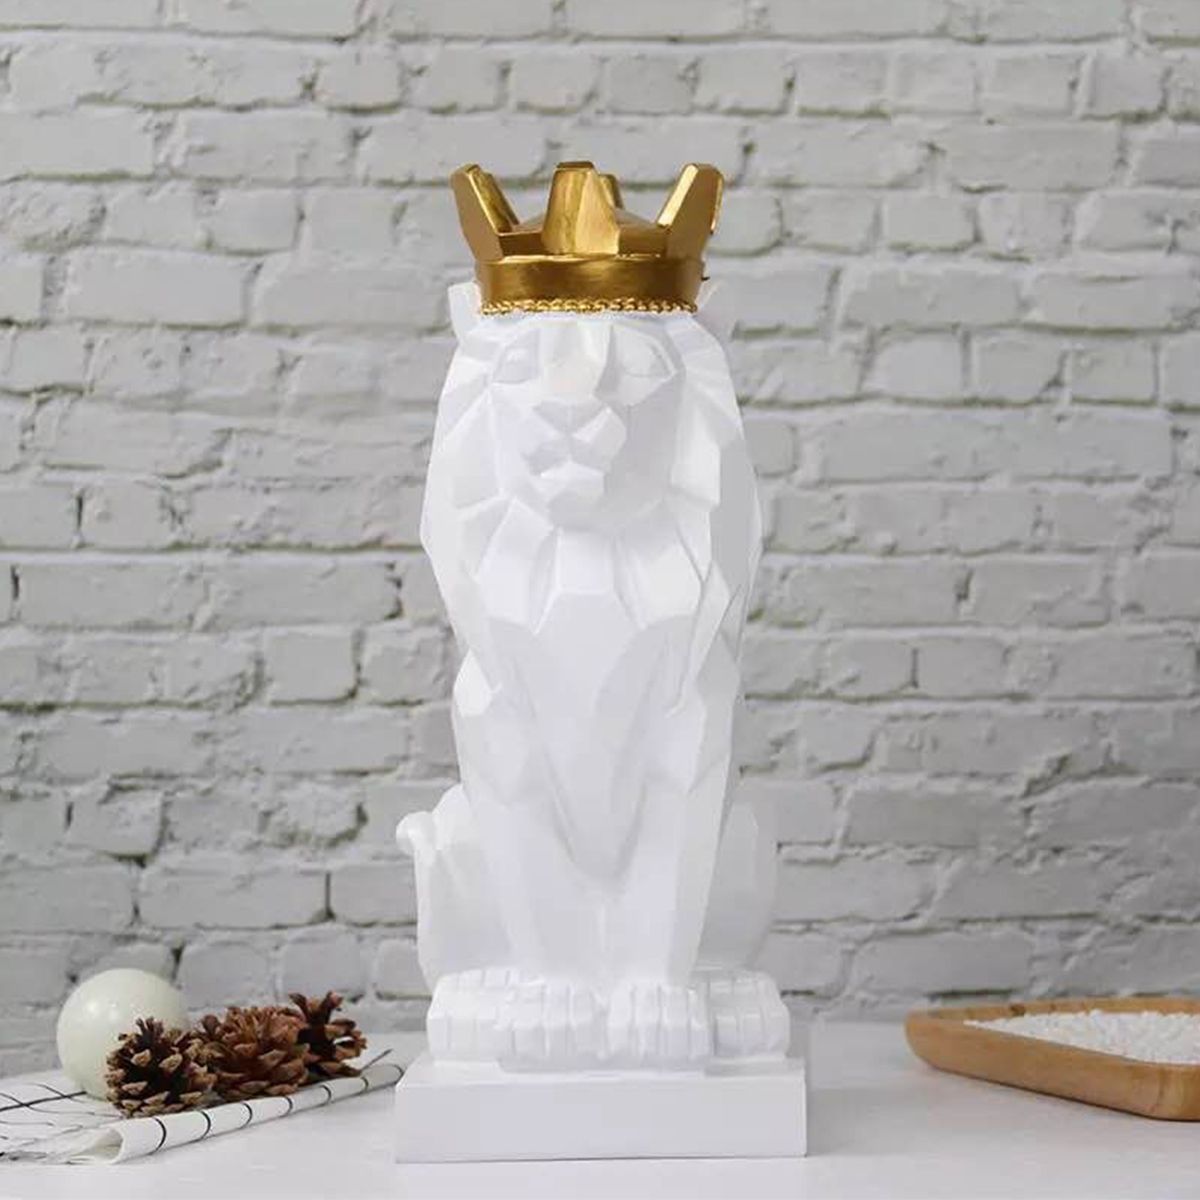 Nordic-Handsome-Crown-Lion-Resin-Statue-Handicraft-Home-Decor-Sculptures-Gift-1639847